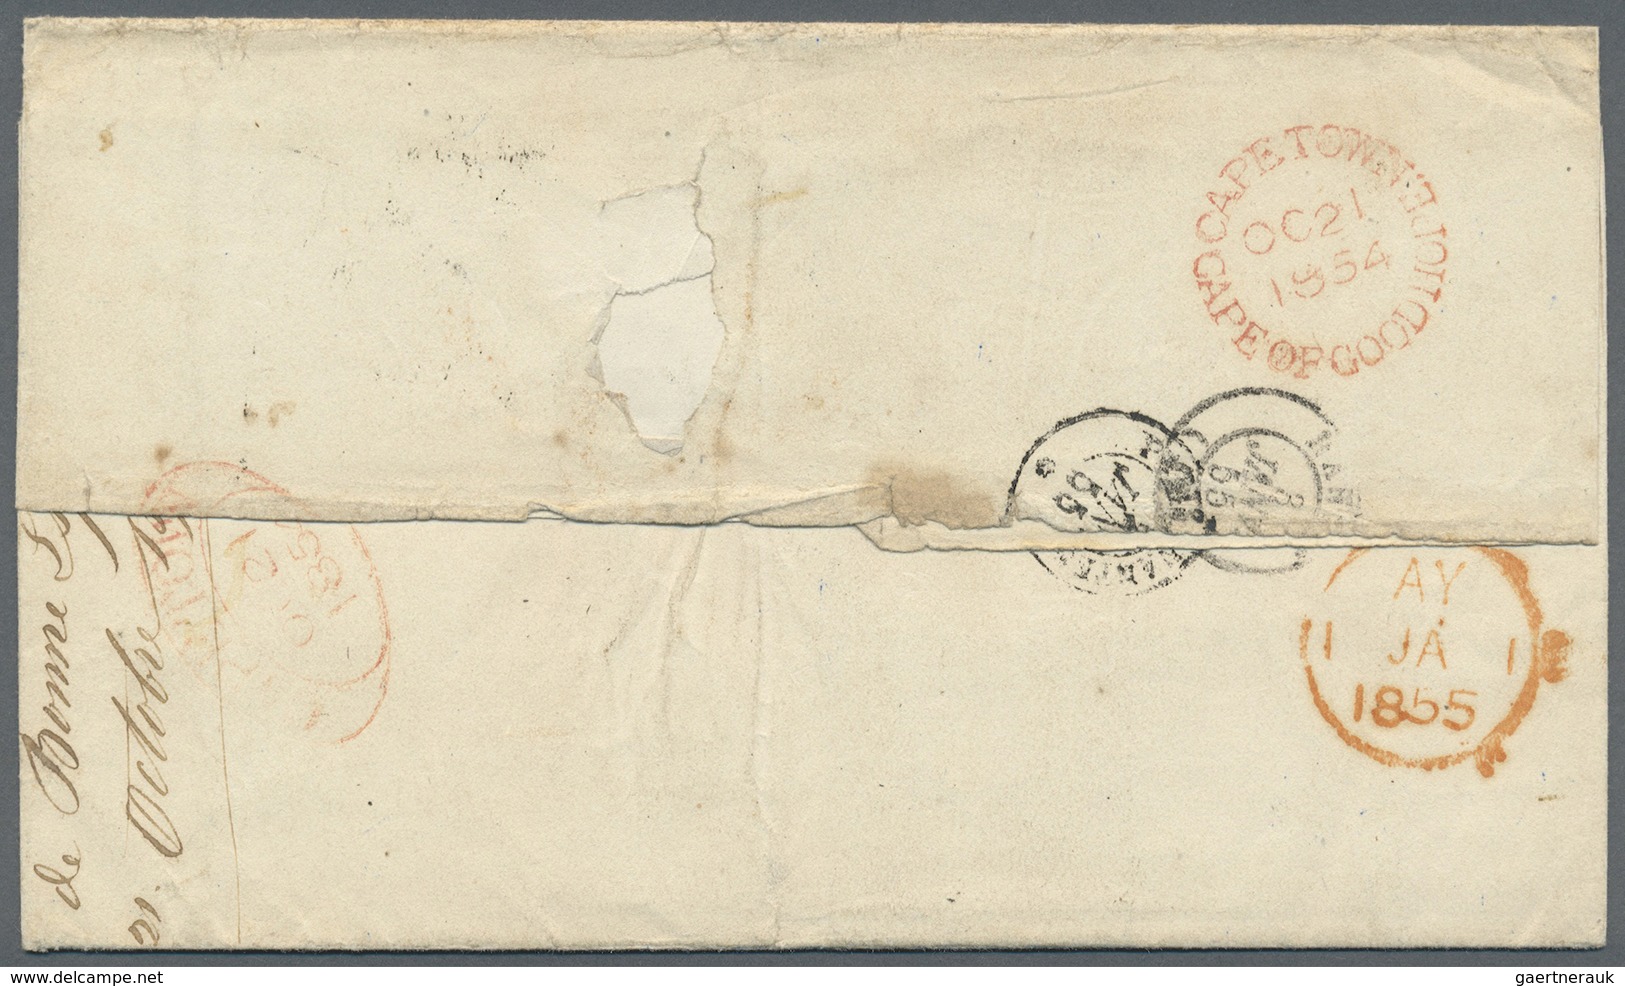 Br Kap Der Guten Hoffnung: 1854. Stampless 'Returned Letter' Envelope Written From The 'General Post Of - Kaap De Goede Hoop (1853-1904)